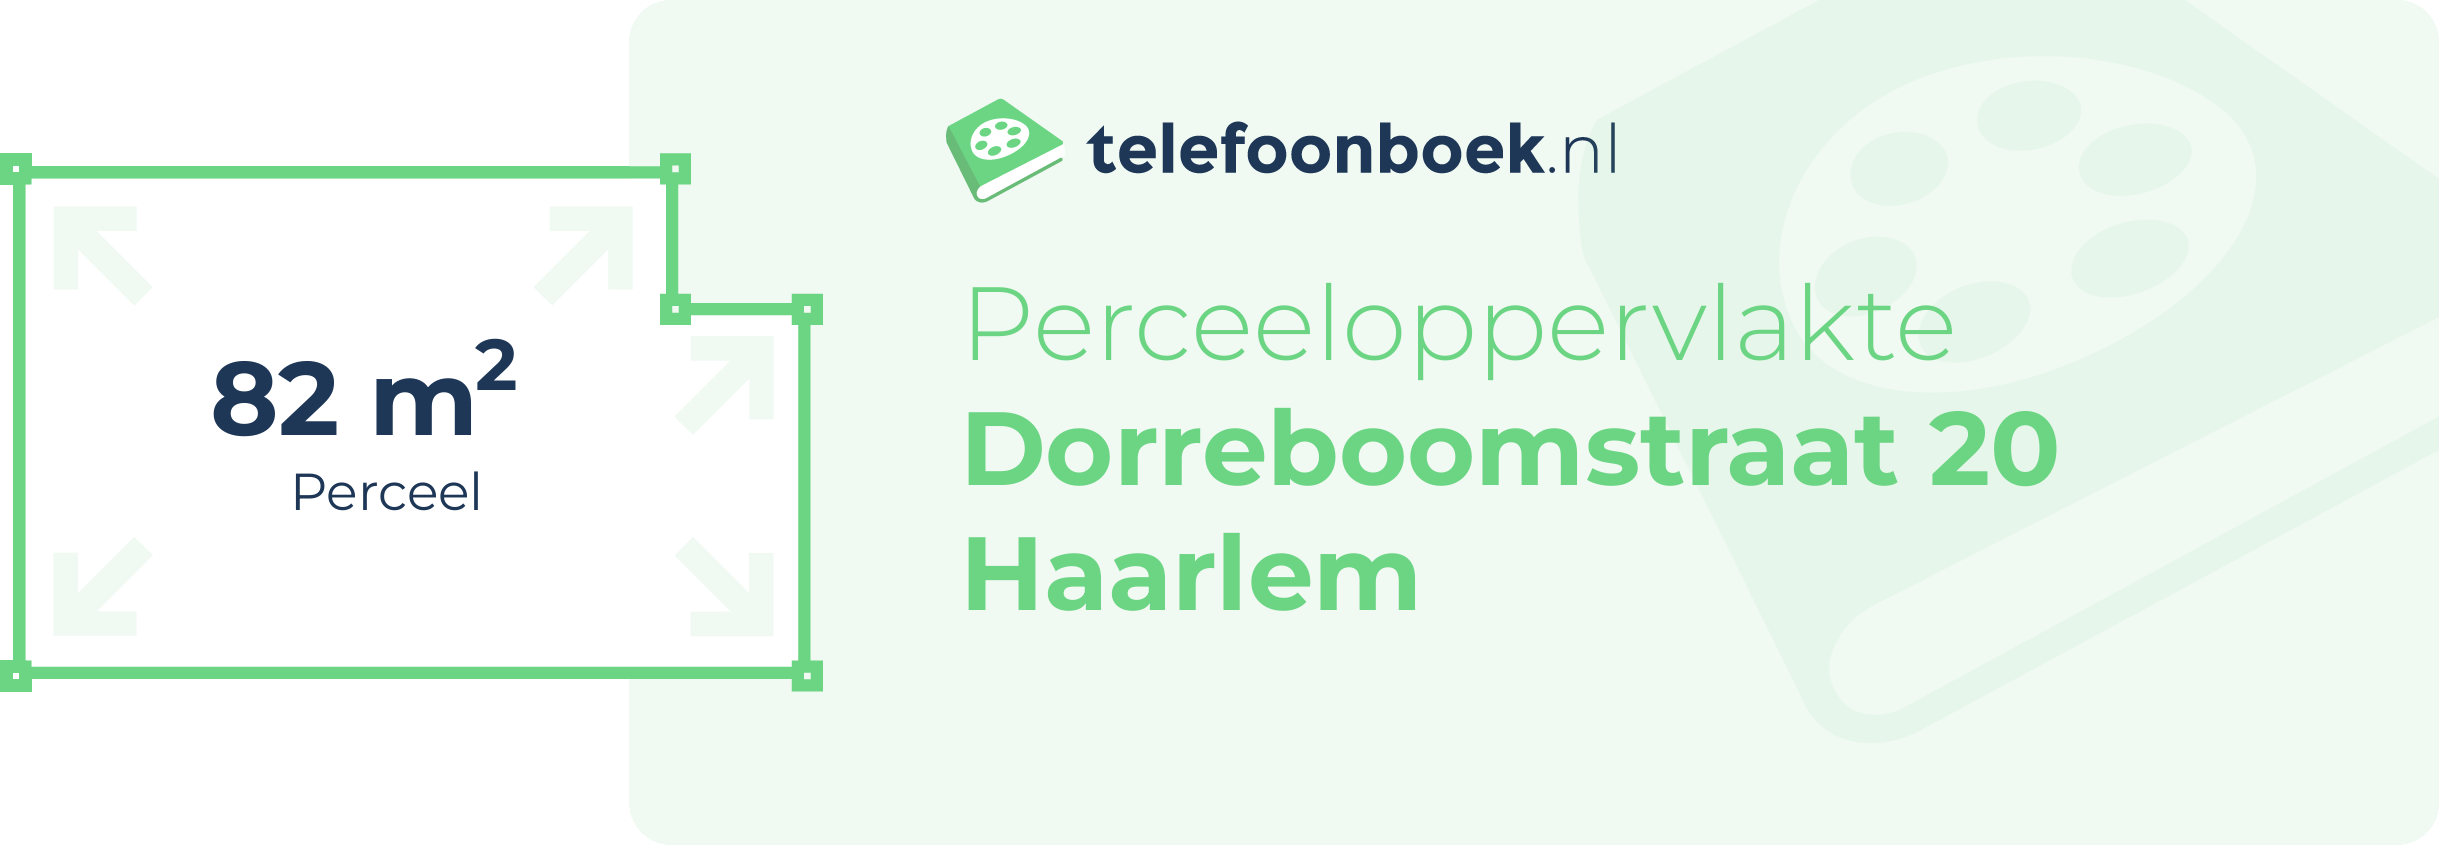 Perceeloppervlakte Dorreboomstraat 20 Haarlem